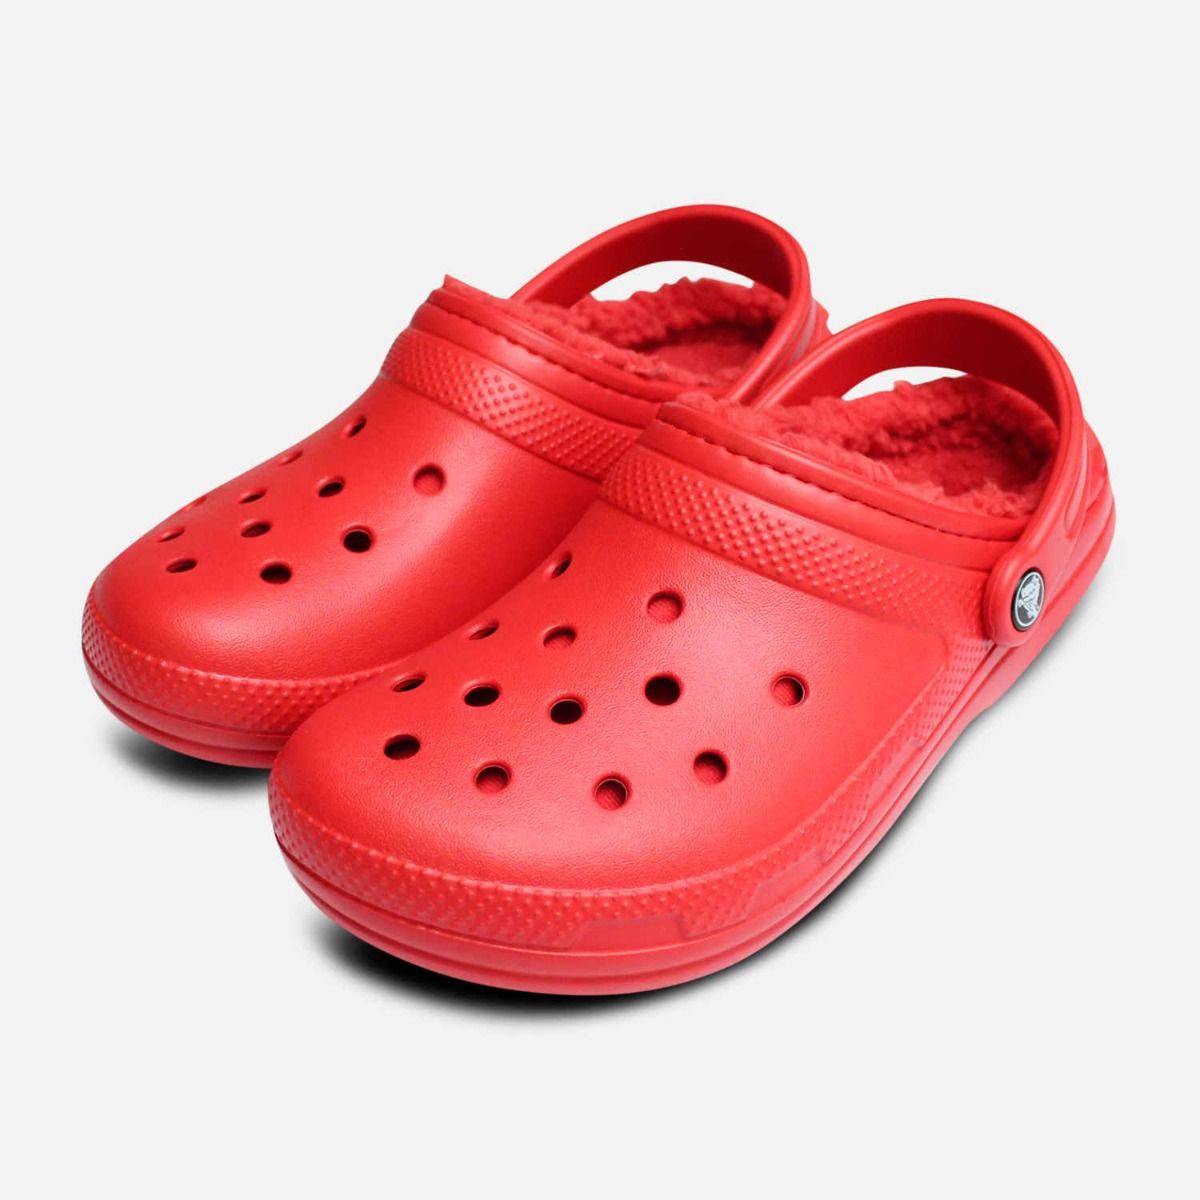 red crocs for women